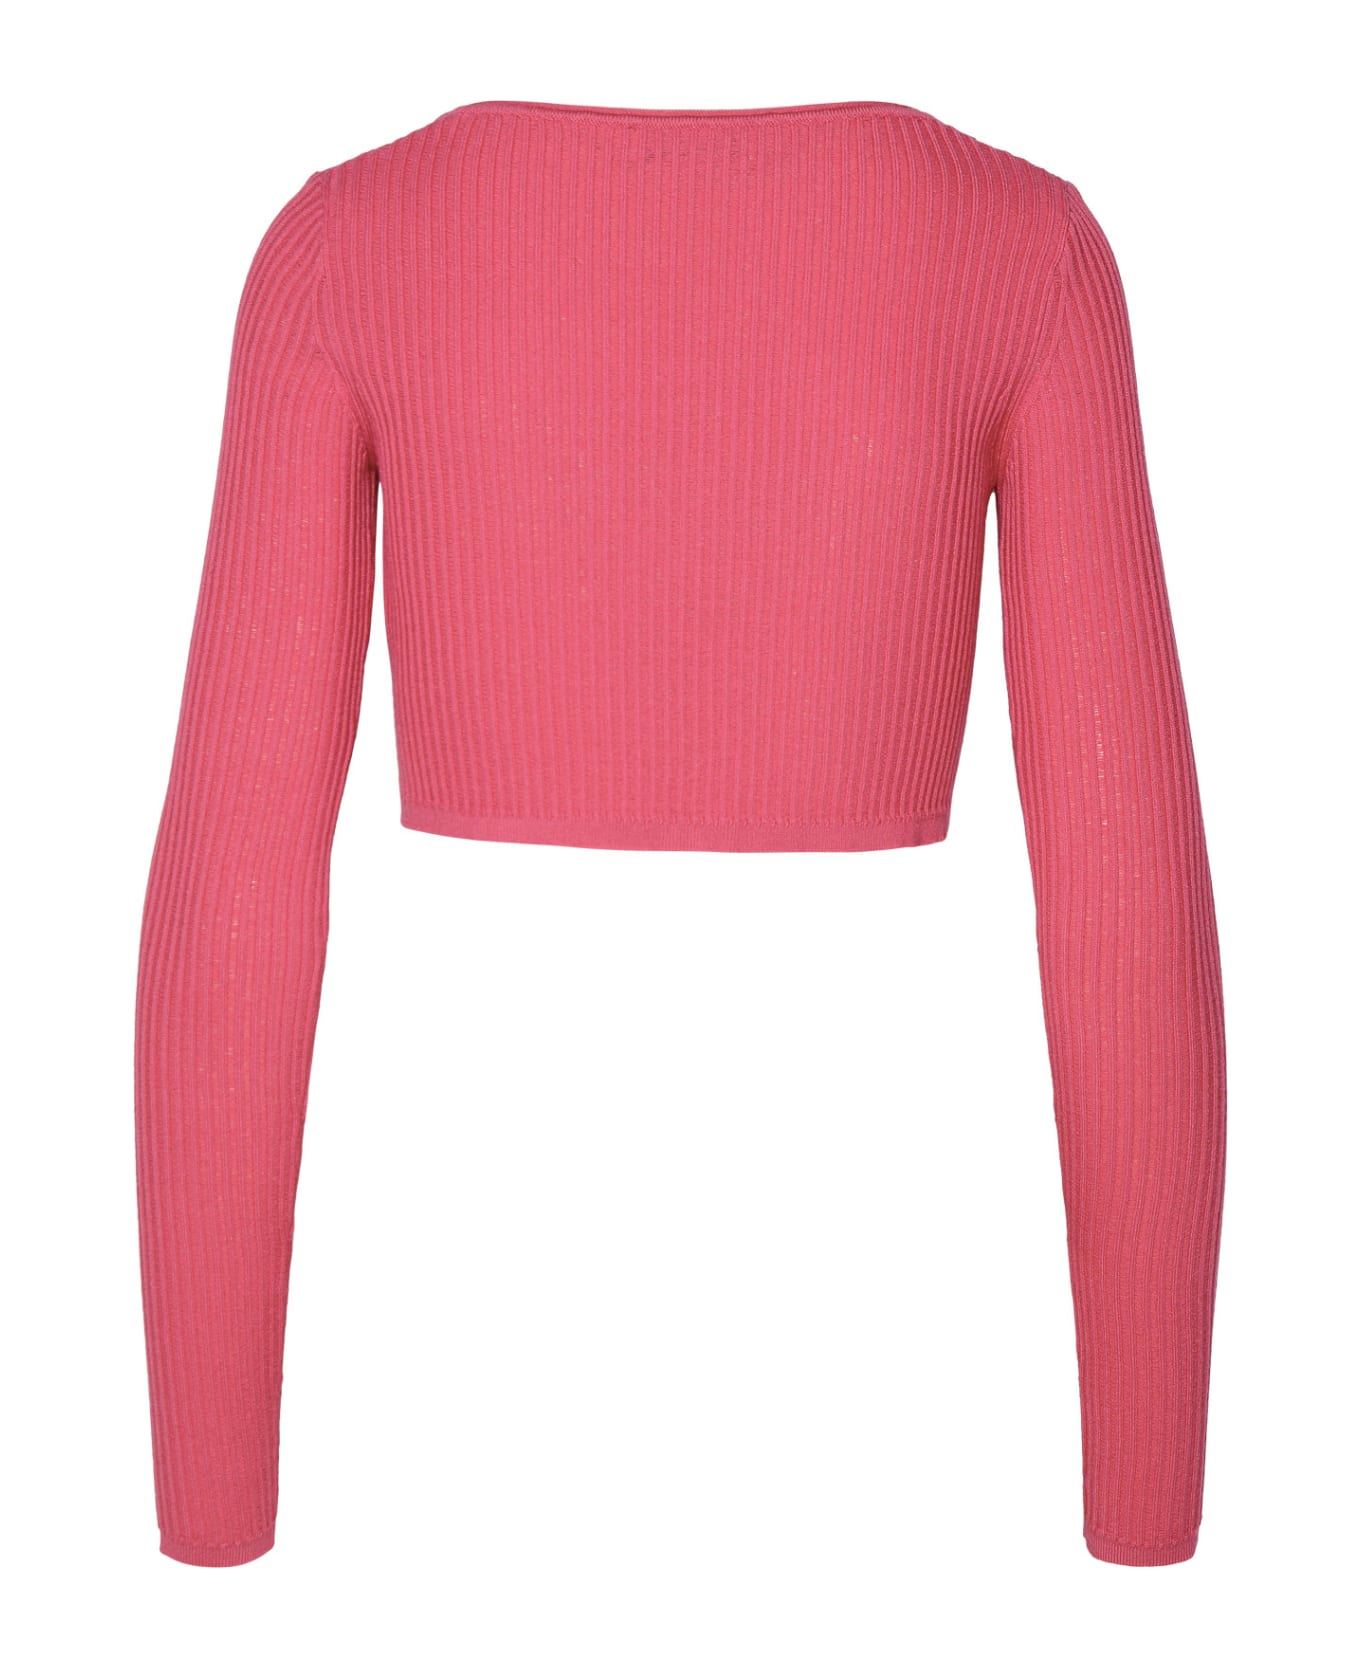 Blumarine Fuchsia Viscose Blend Cropped Sweater - Red Bud ニットウェア